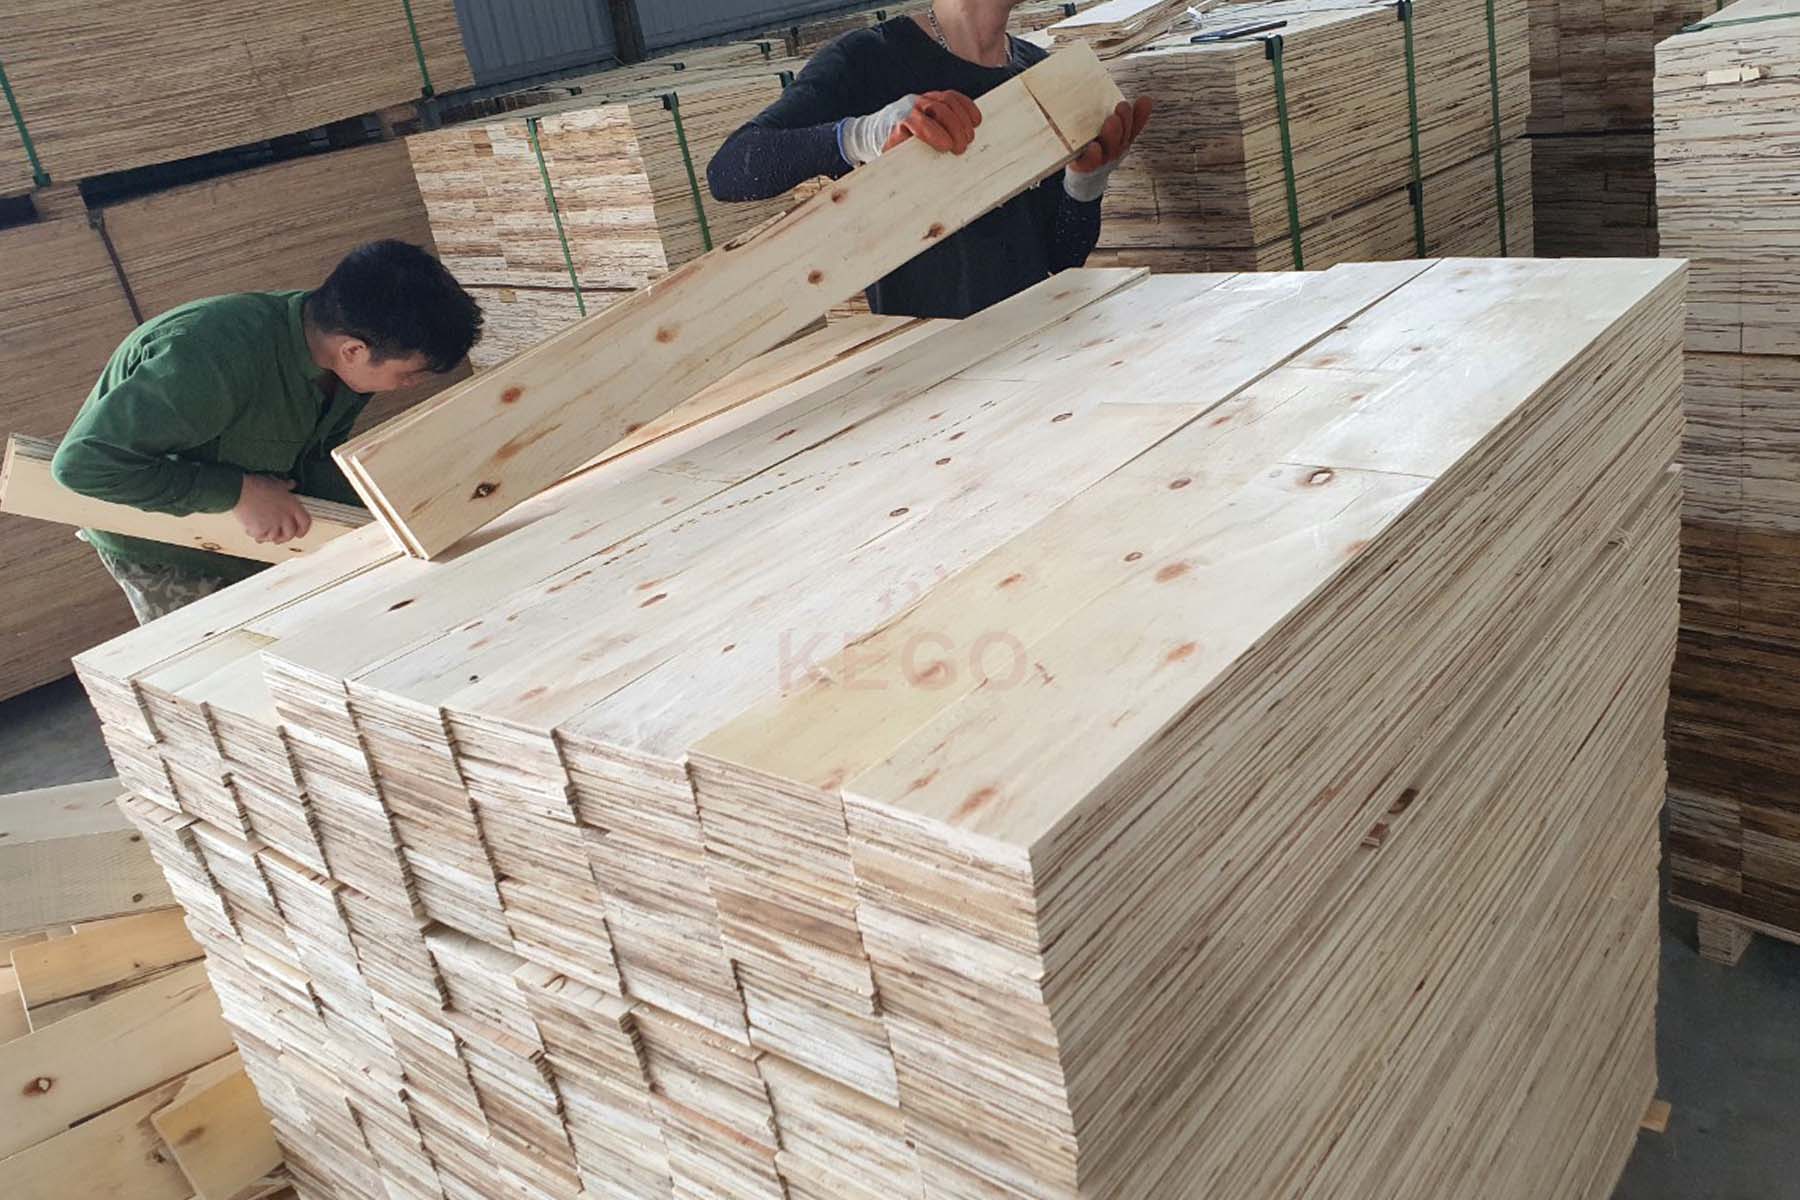 https://kego.com.vn/wp-content/uploads/2015/09/laminated-veneer-lumber-lvl-kego-10.jpg